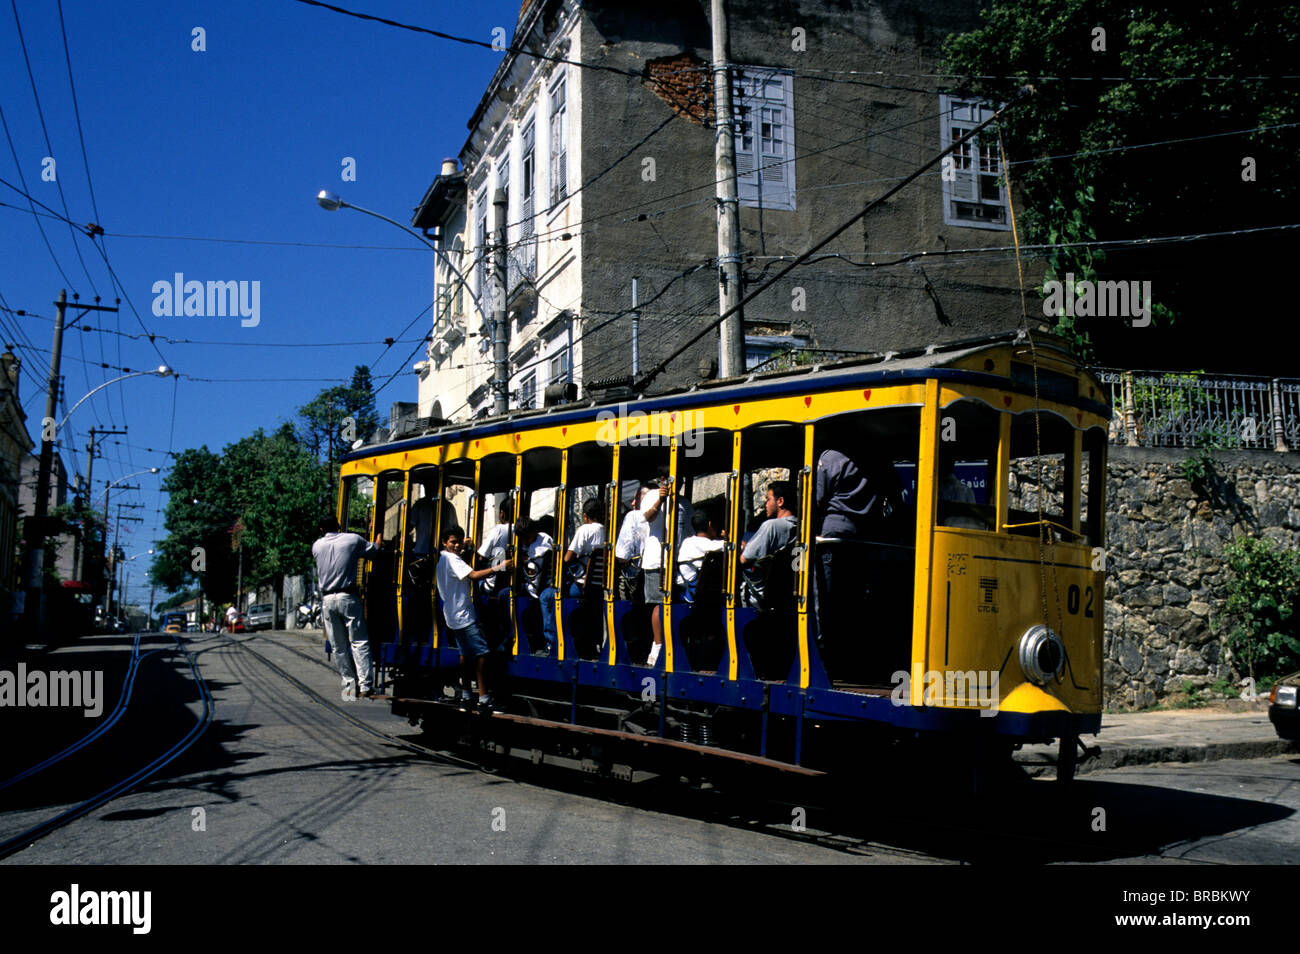 The Santa Teresa tram in Rio de Janeiro, Brazil Stock Photo